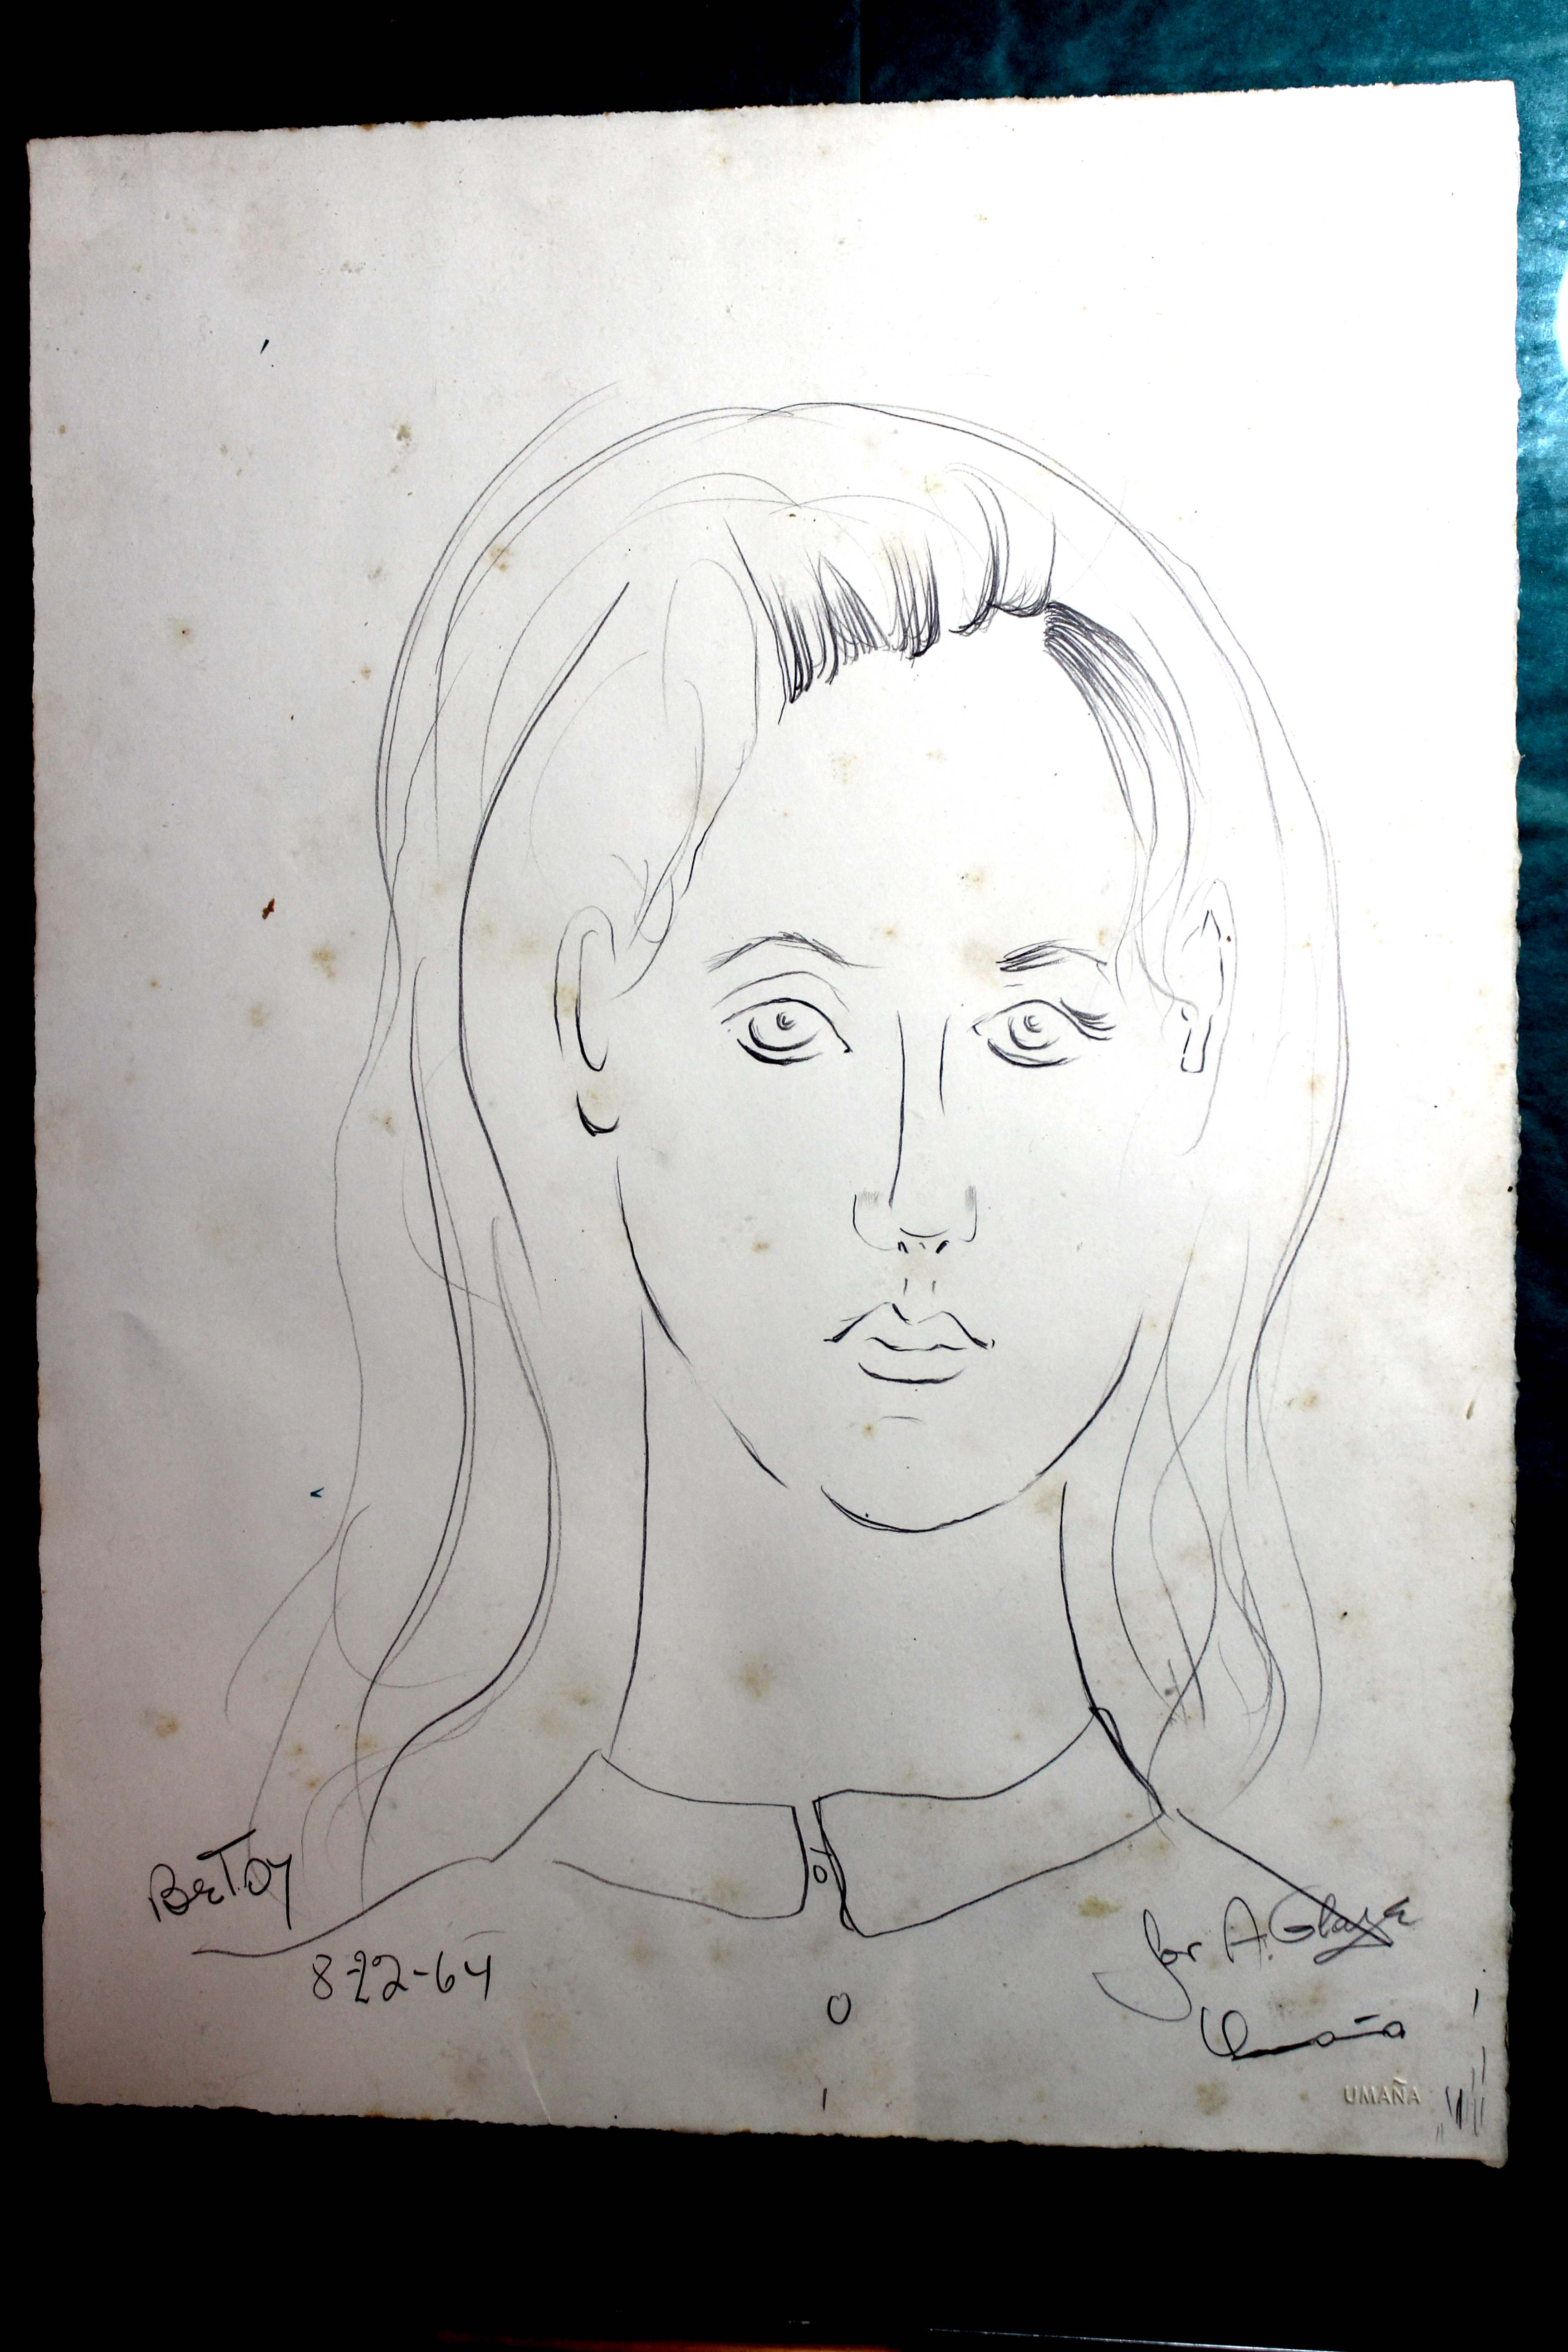 Umana's portrait of Betsy